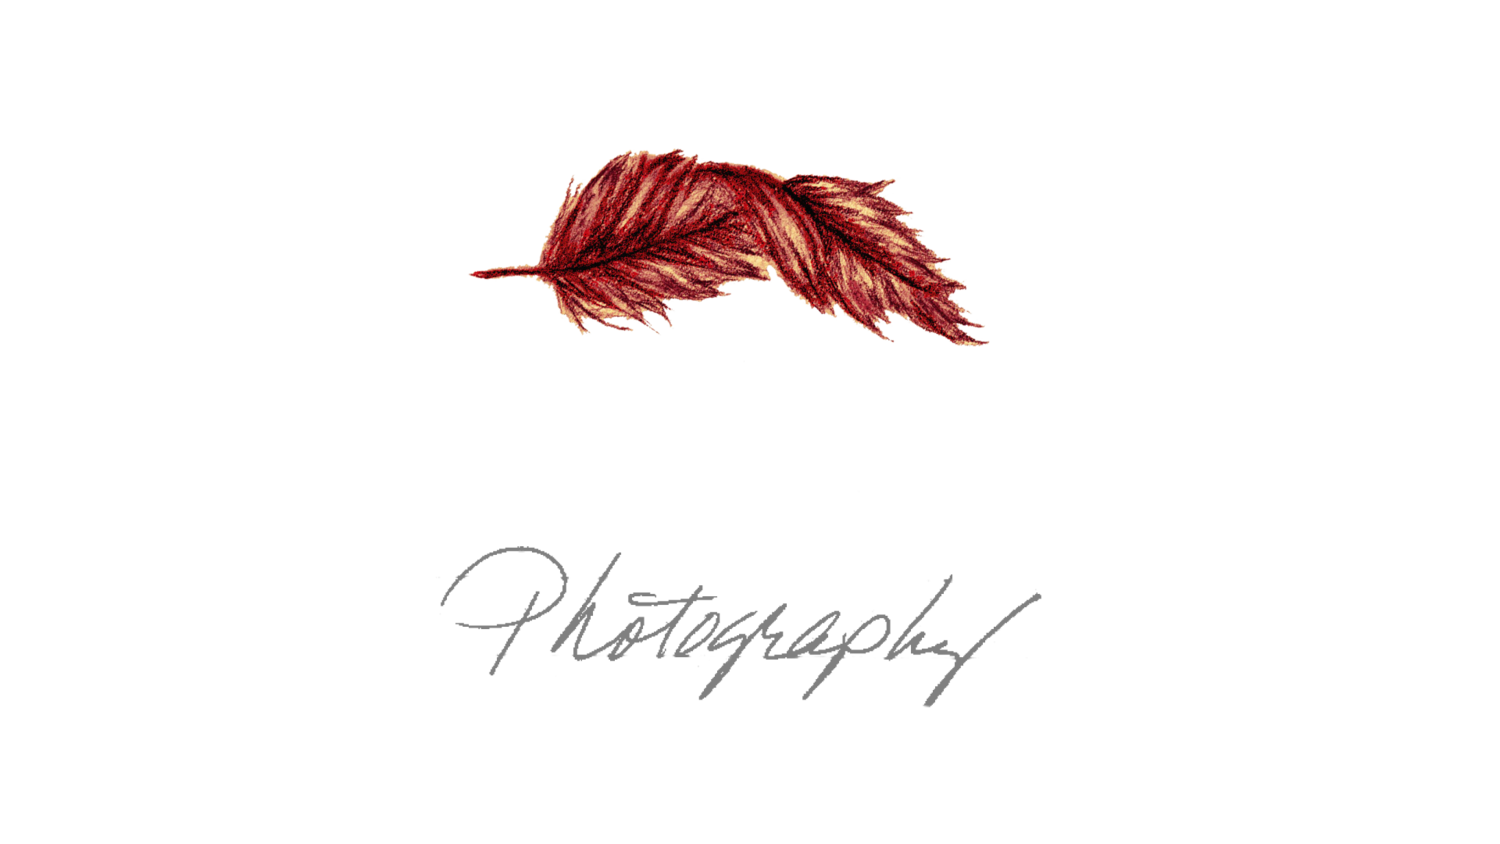 Phoenix Down Photography